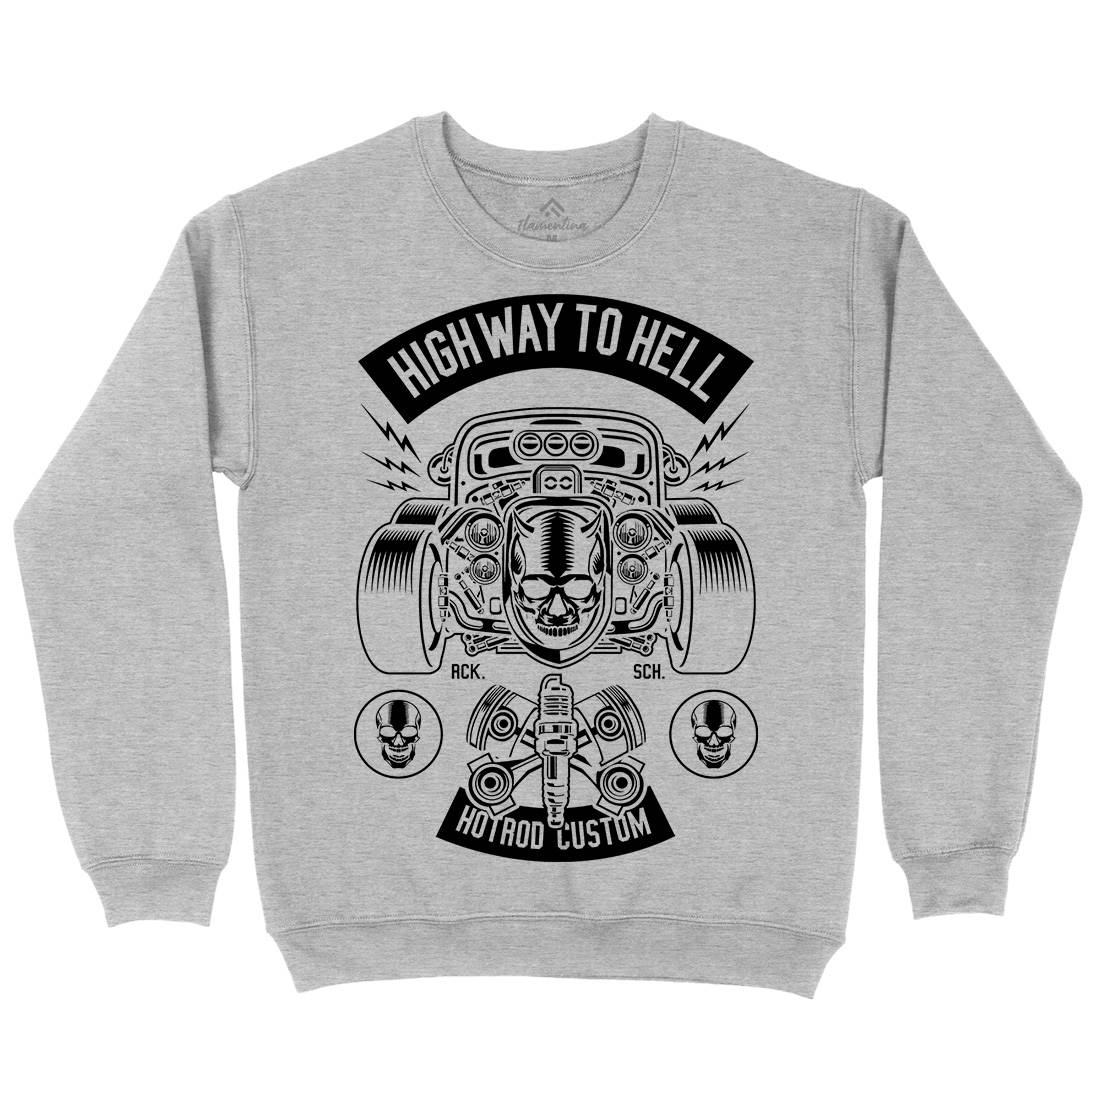 Highway To Hell Kids Crew Neck Sweatshirt Cars B556